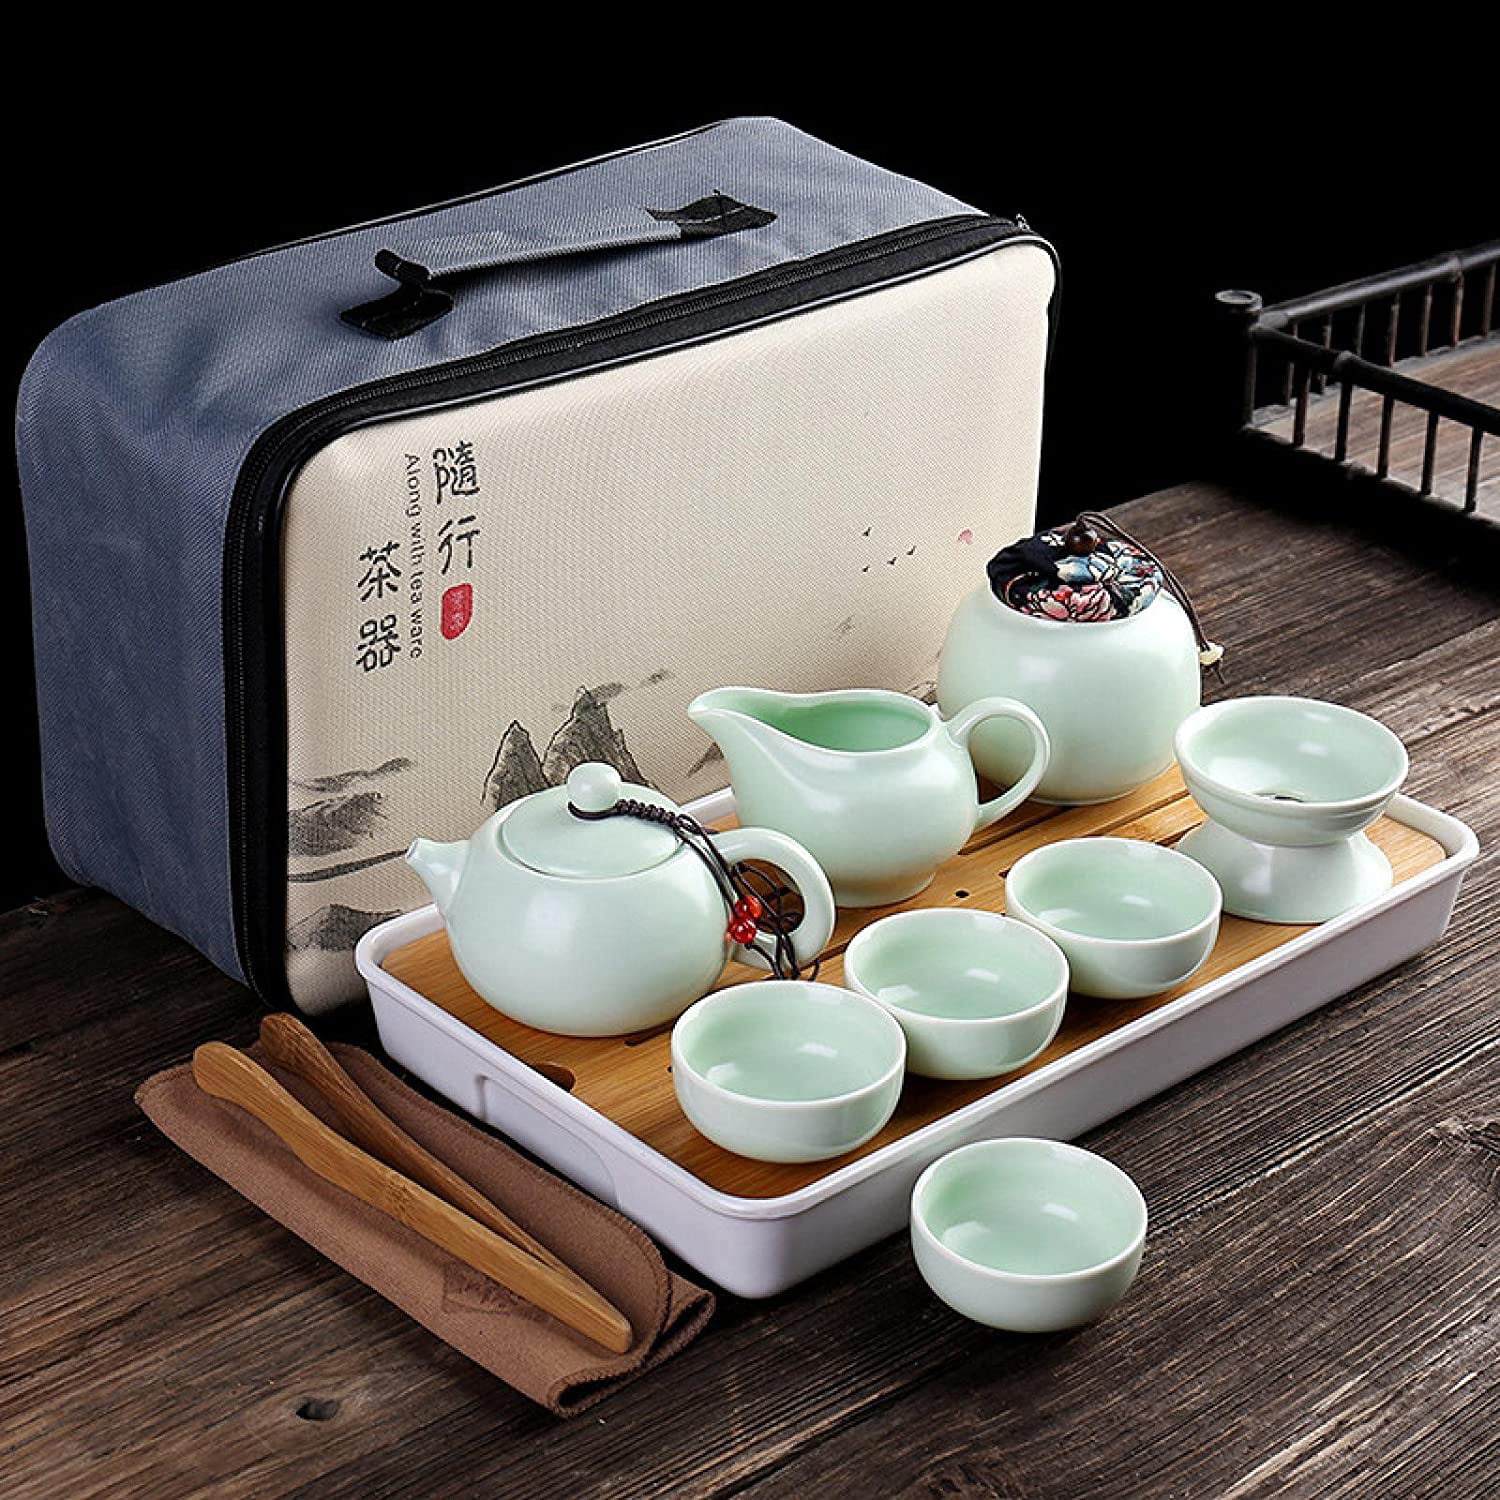 11x Travel Tea Sets Chinese Portable Ceramic Bone China Gaiwan Teacup Kung Fu